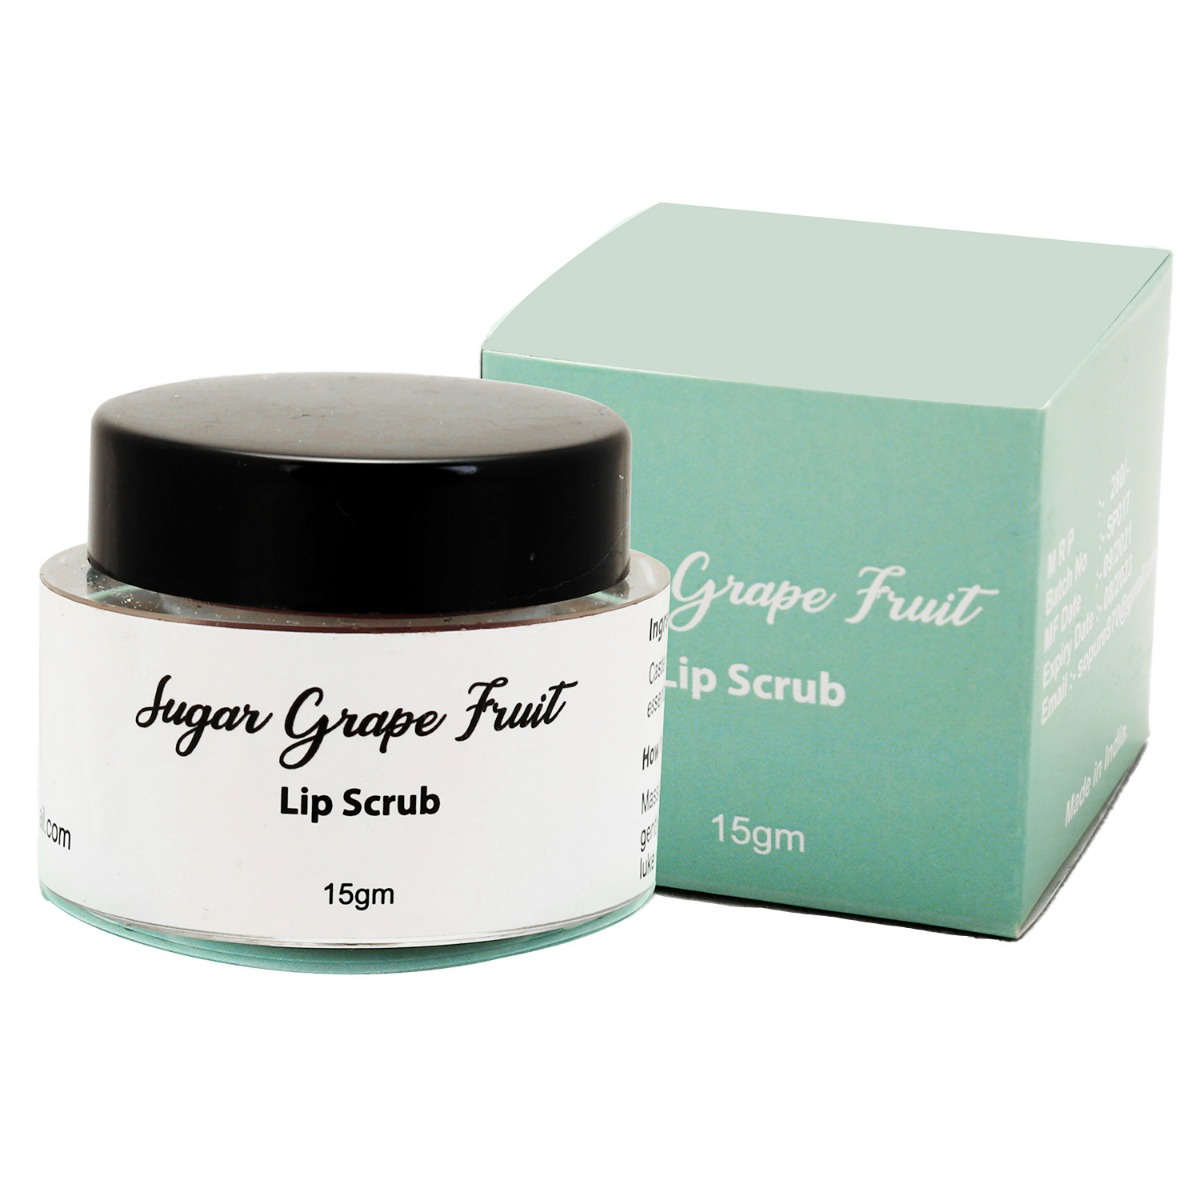 Sopure Sugar Grape Fruit Lip Scrub, 15gm